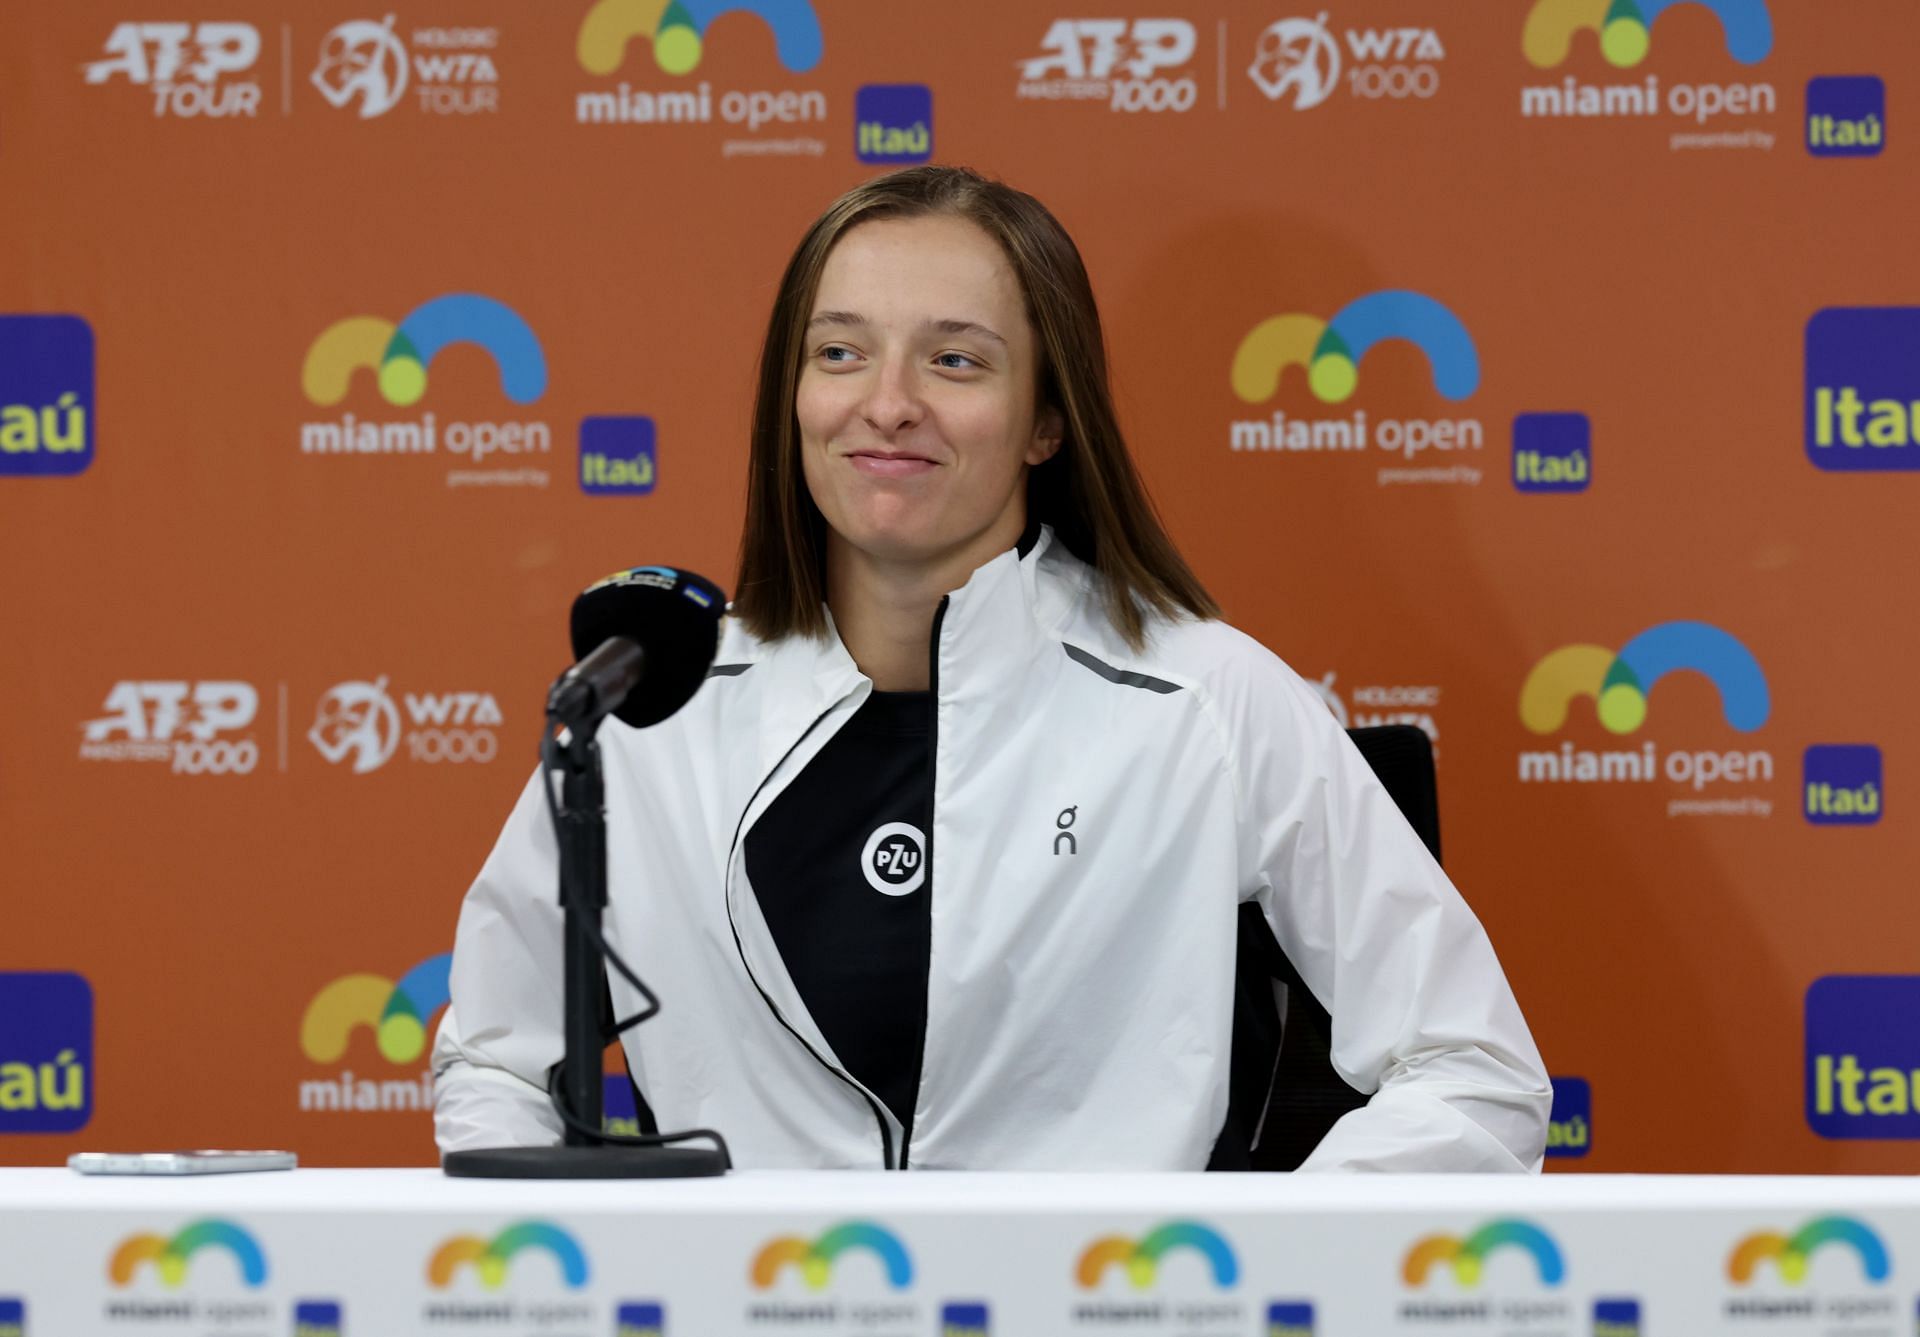 Iga Swiatek at the 2023 Miami Open